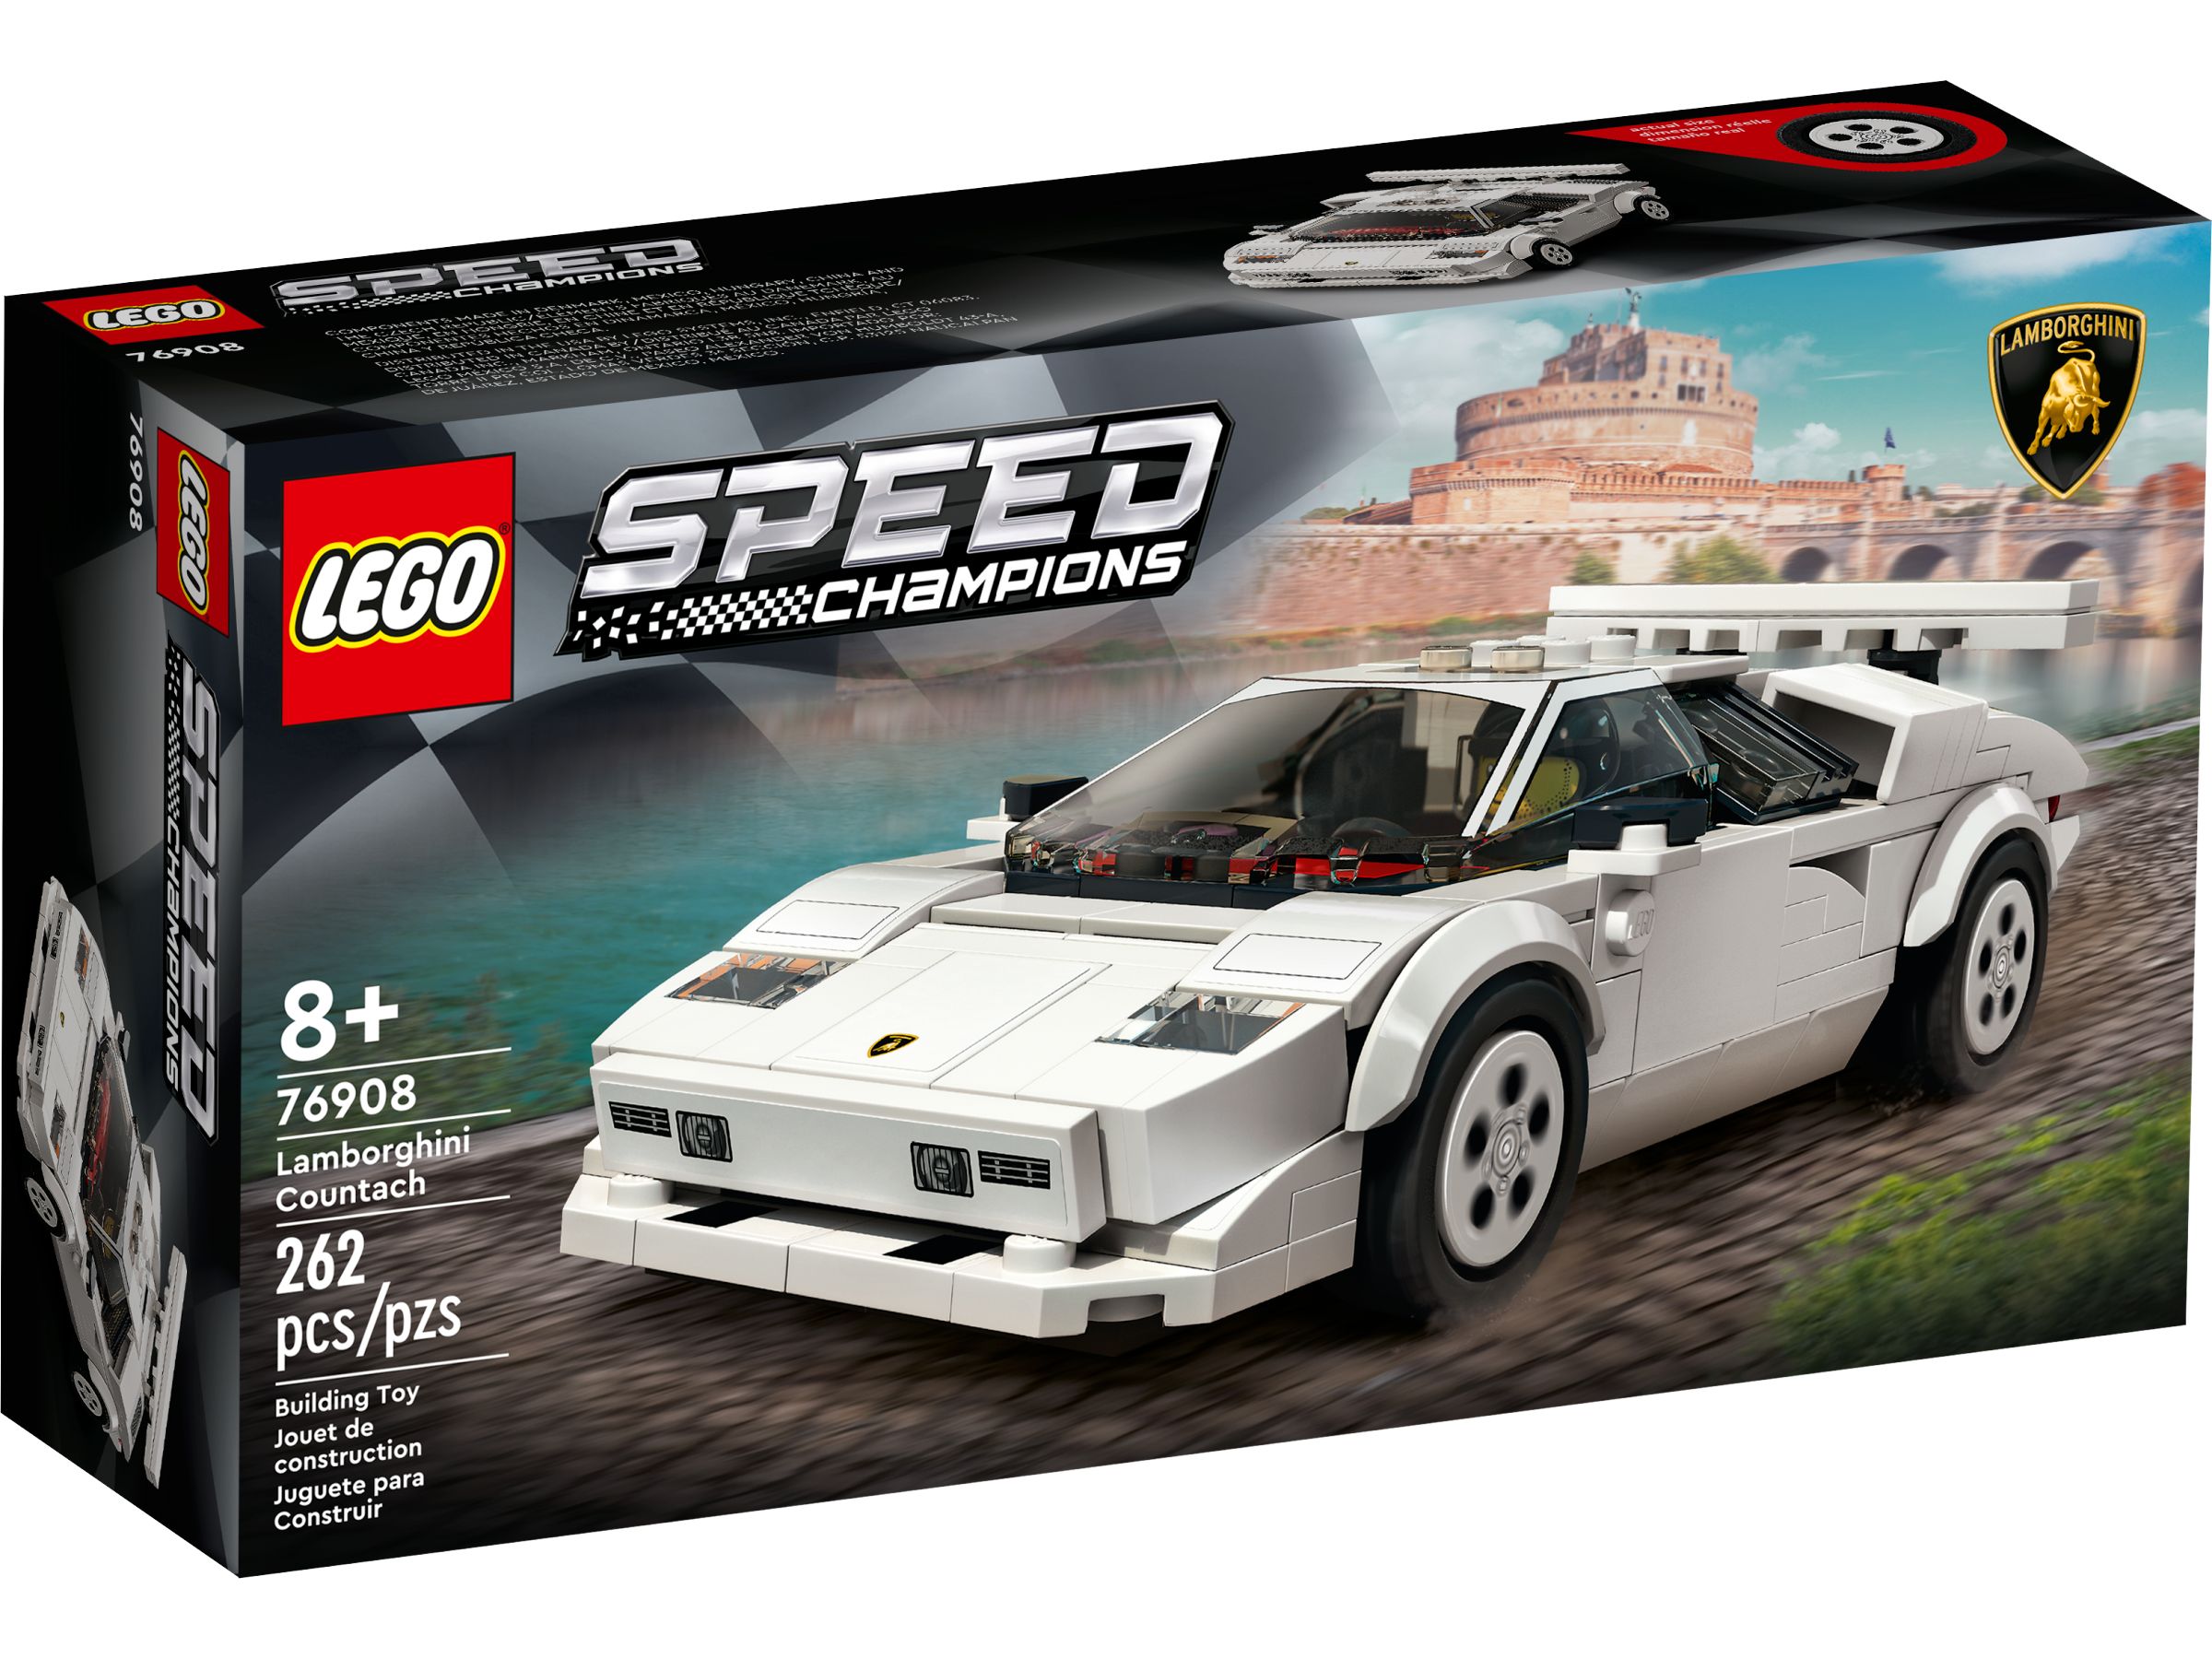 LEGO Speed Champions 76908 Lamborghini Countach LEGO_76908_alt1.jpg